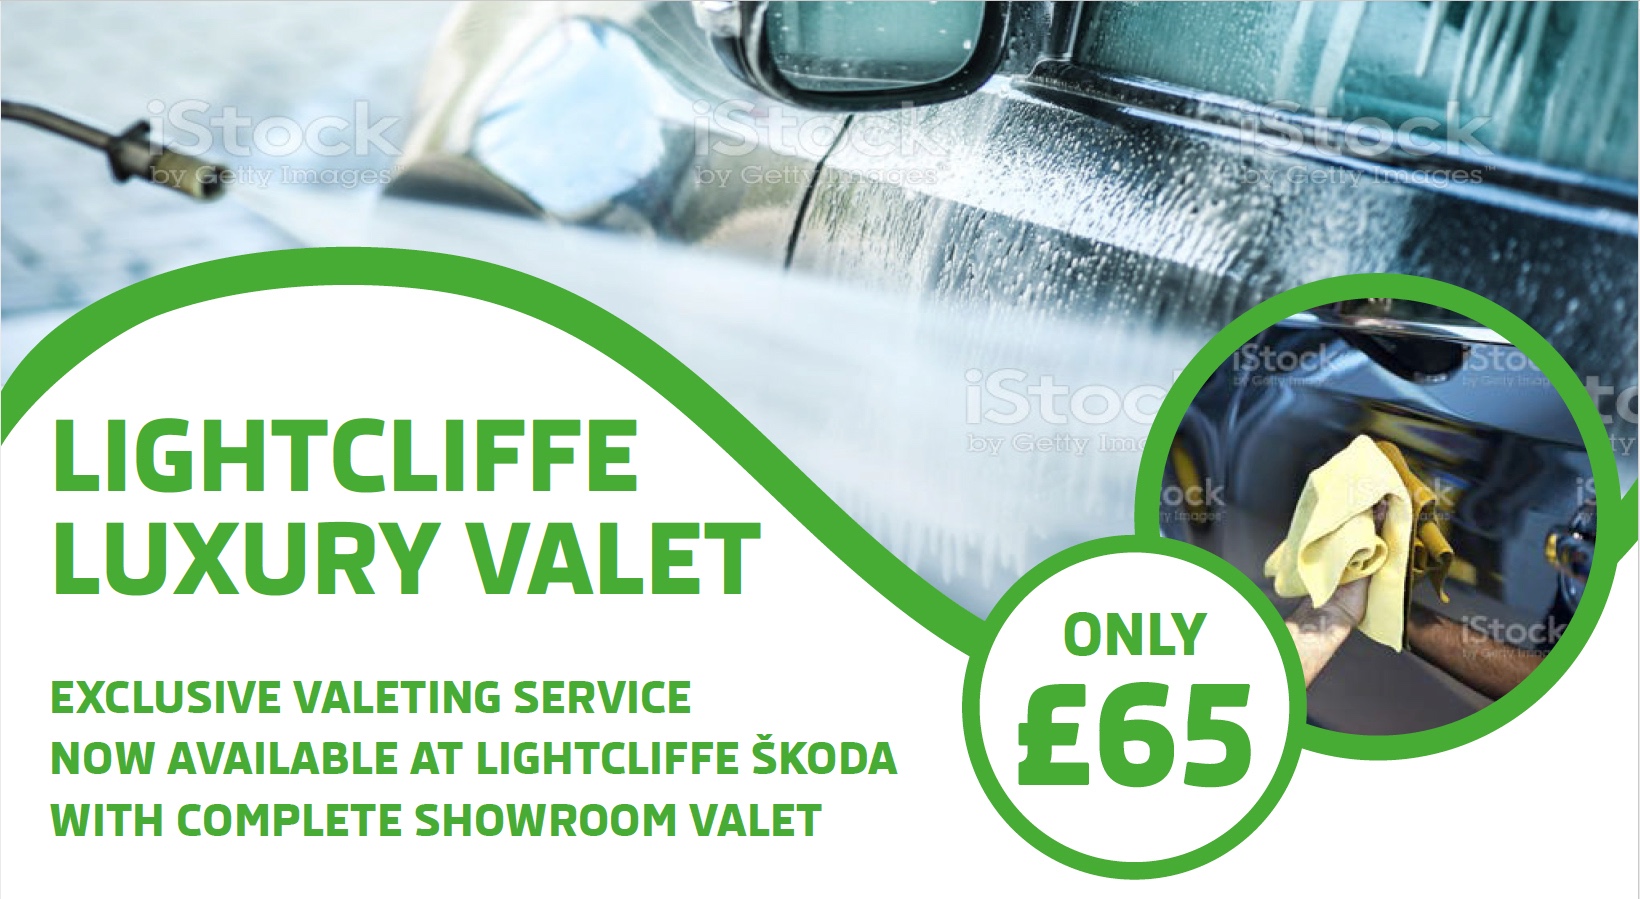 New Lightcliffe Luxury Valet Offer